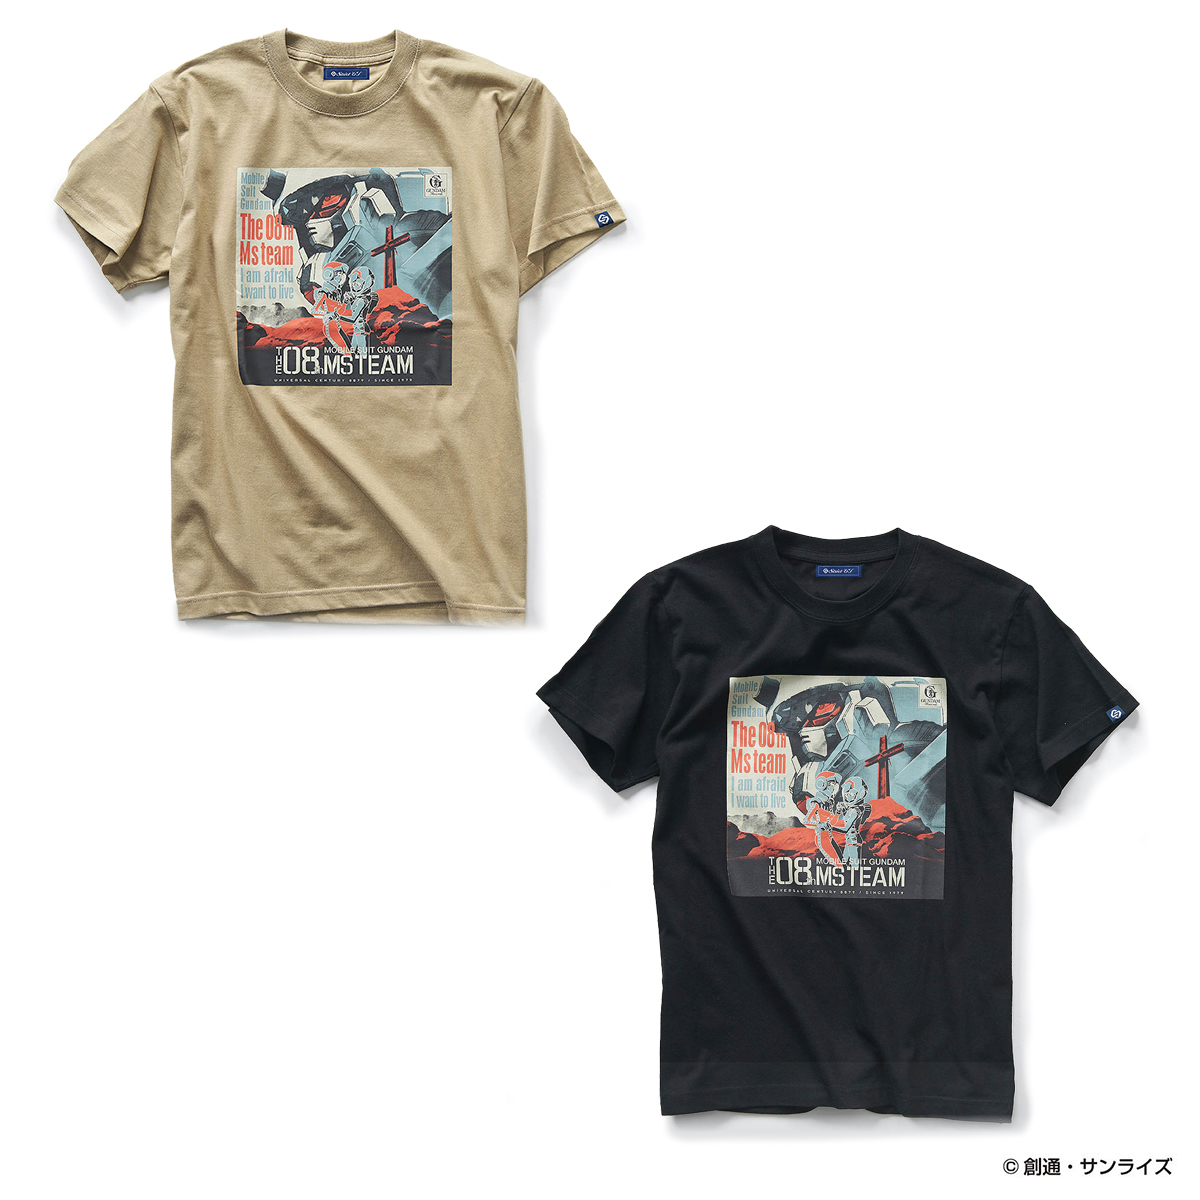 STRICT-G GUNDAM RECORDS『機動戦士ガンダム 第08MS小隊』Tシャツ